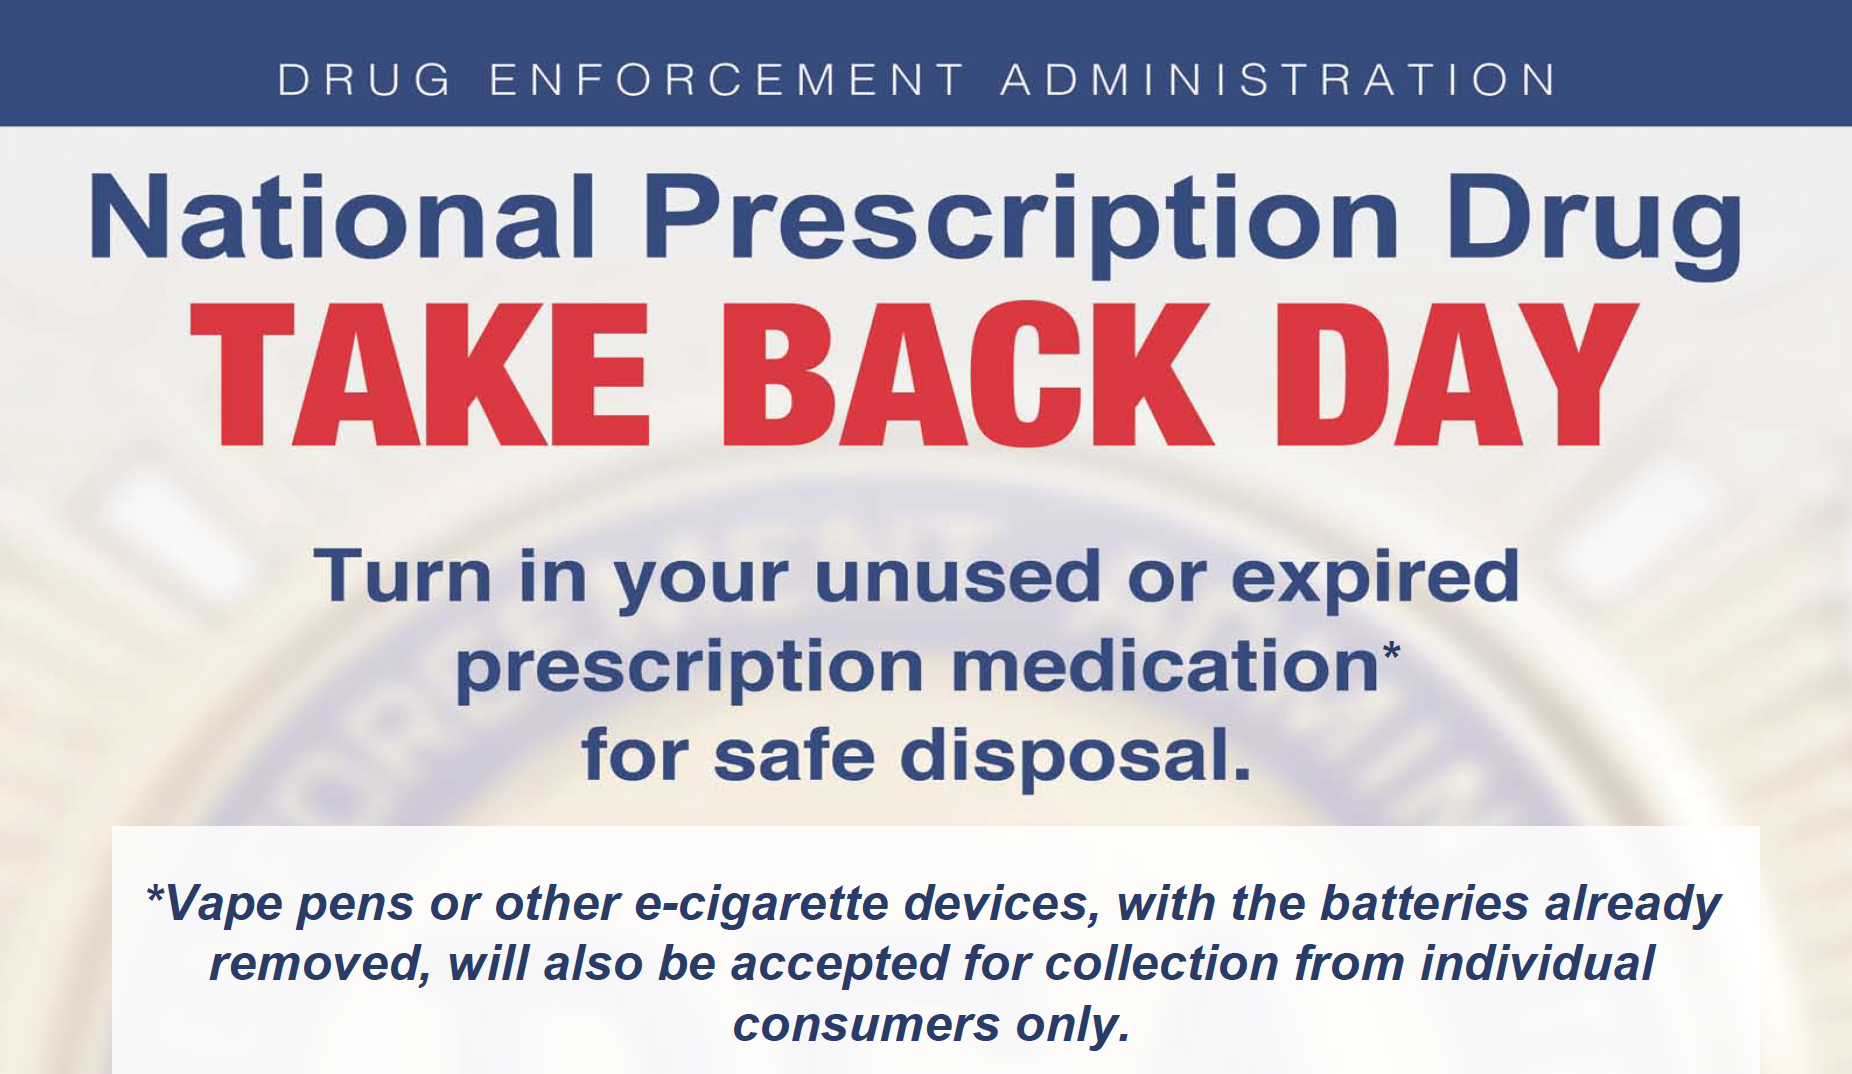 National Prescription Drug TakeBack Day is Saturday, October 26